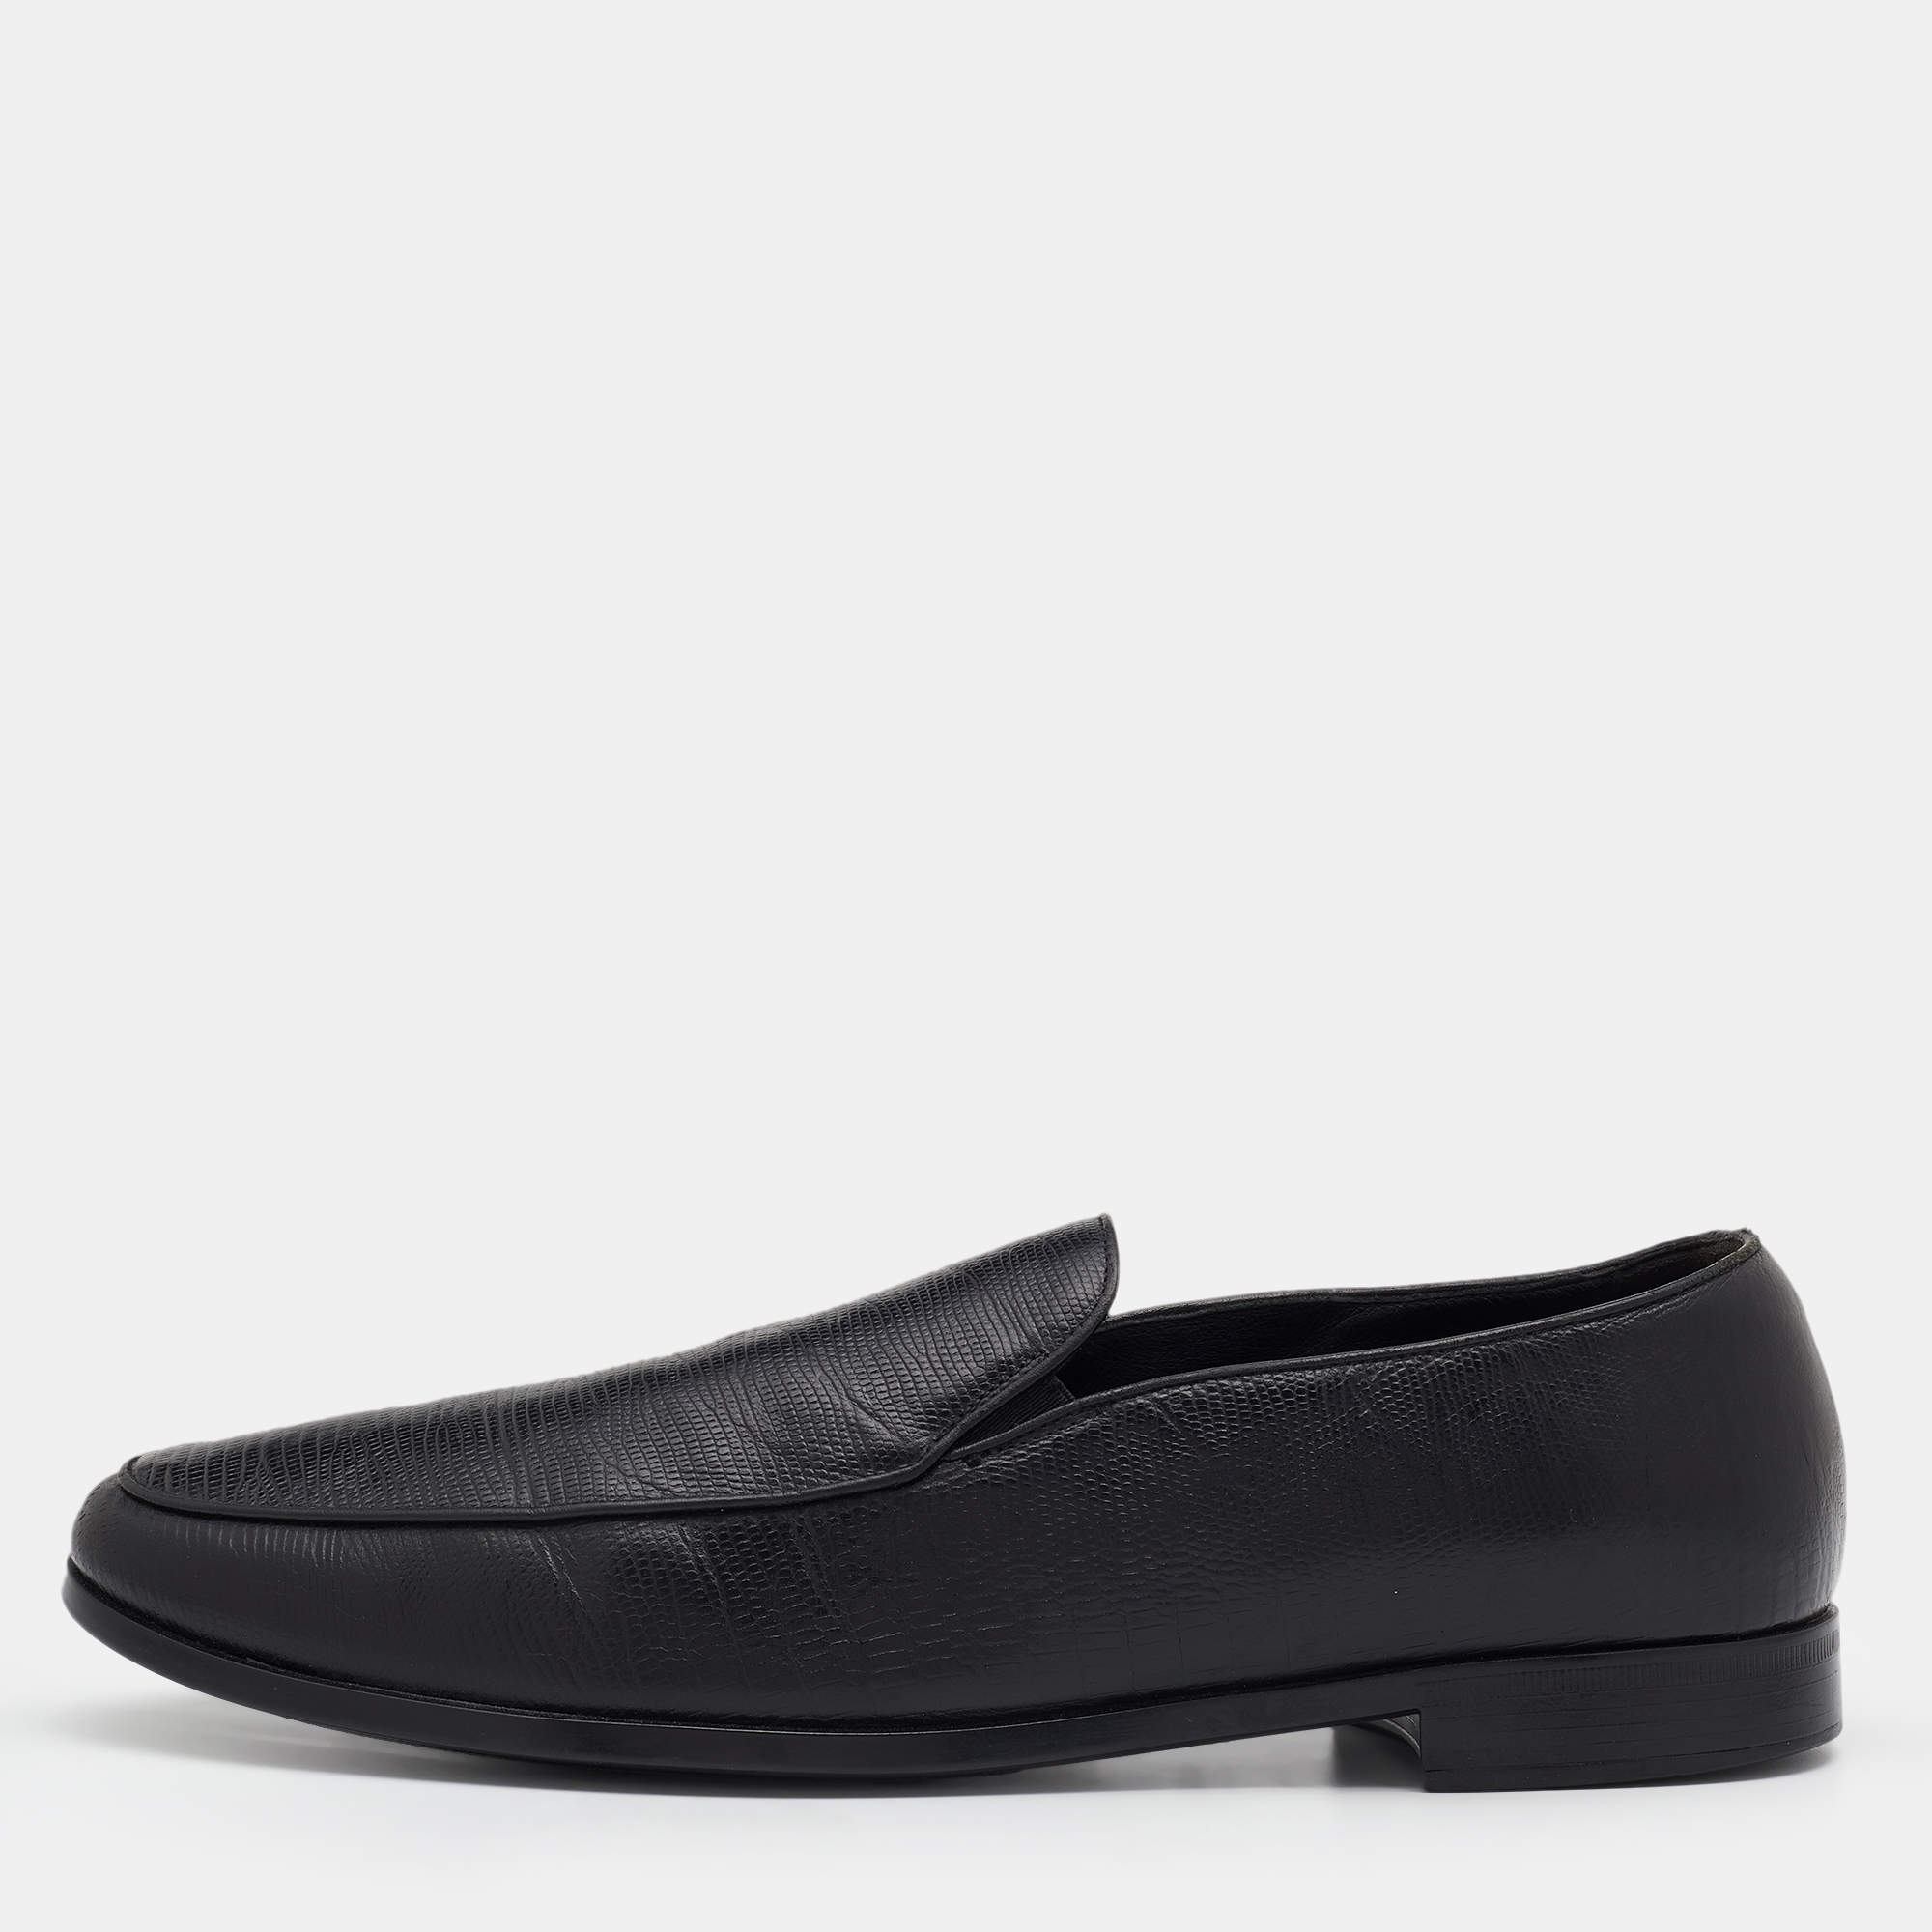 Giorgio Armani Loafers Shoes in Black for Men